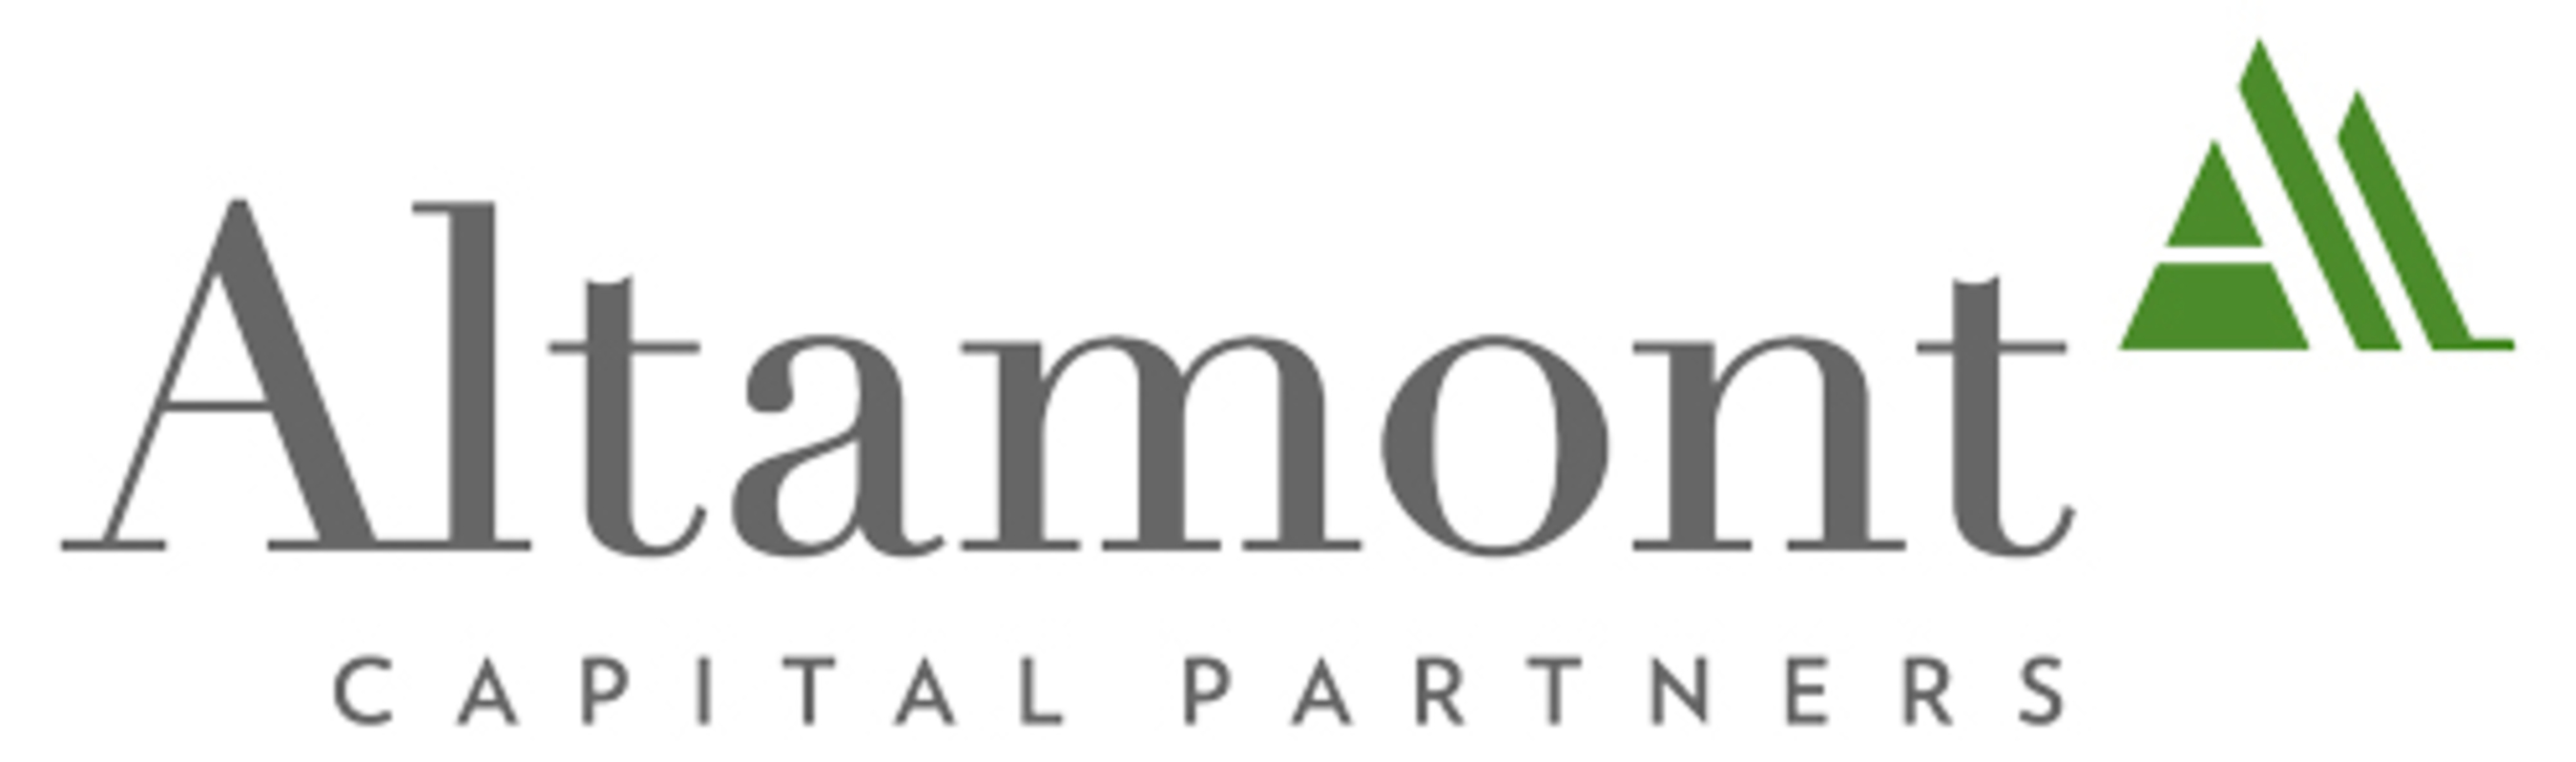 Altamont Capital Partners logo. (PRNewsFoto/Altamont Capital Partners) (PRNewsFoto/)